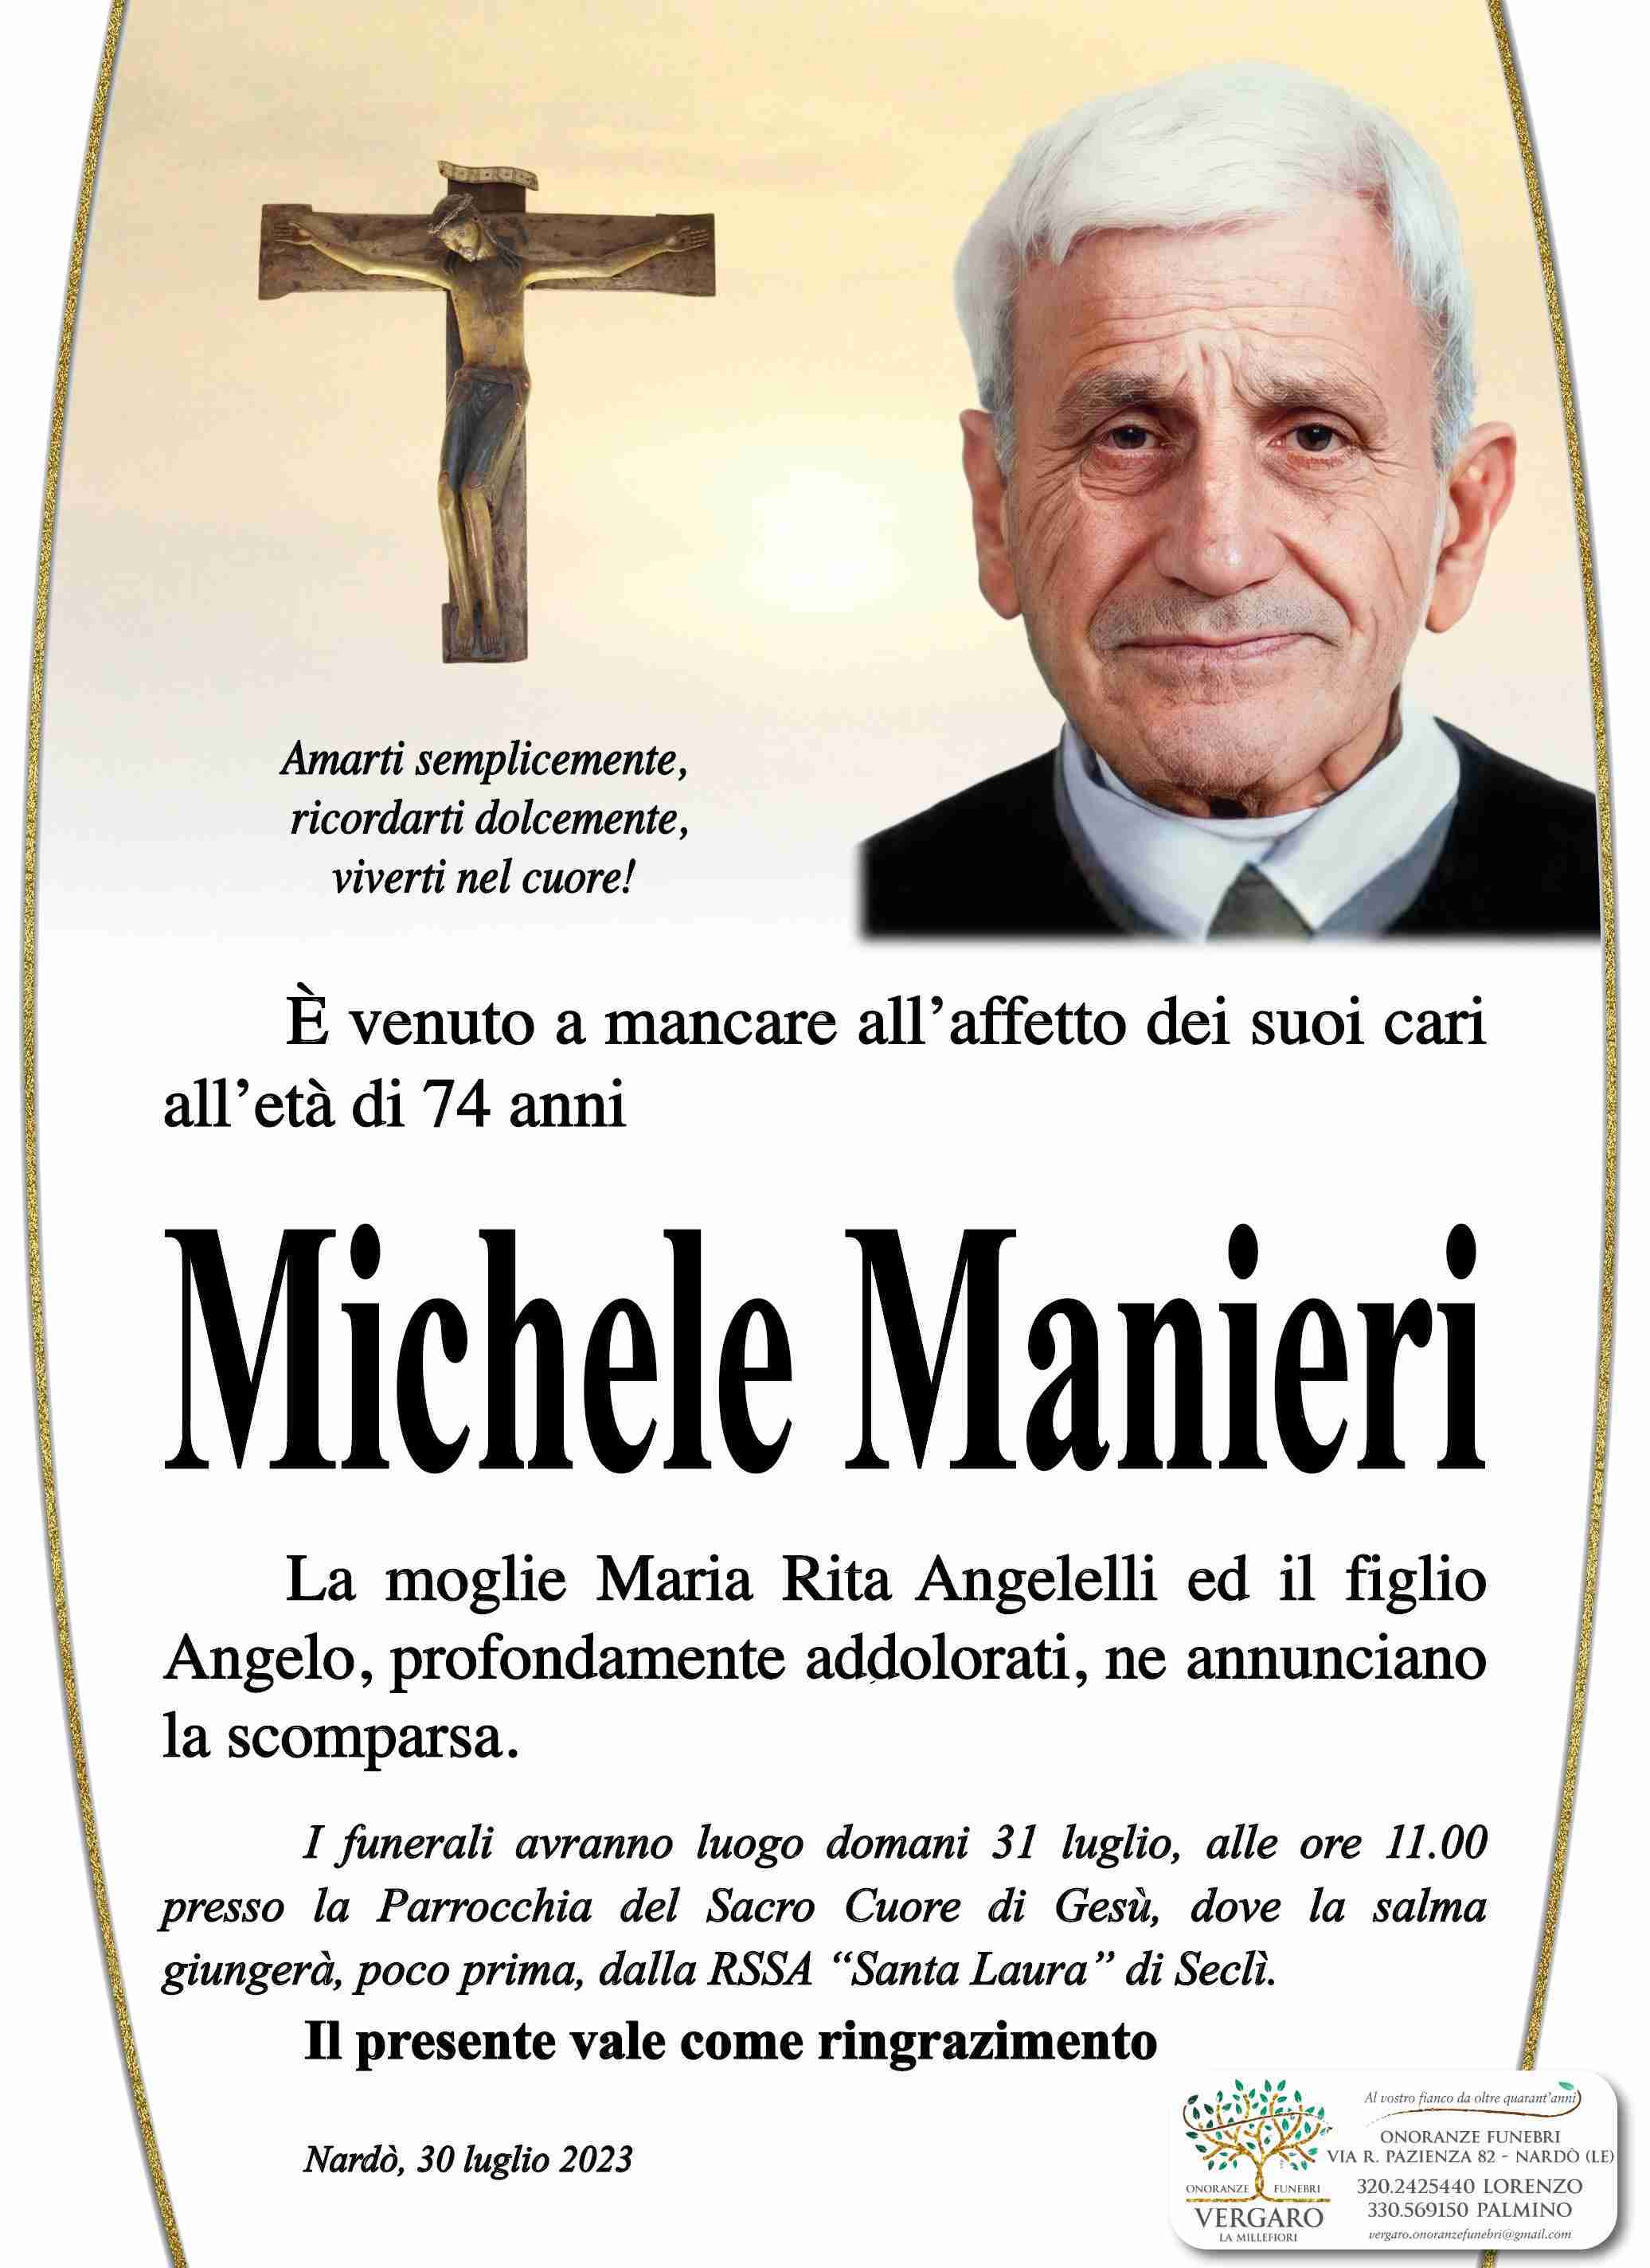 Michele Manieri